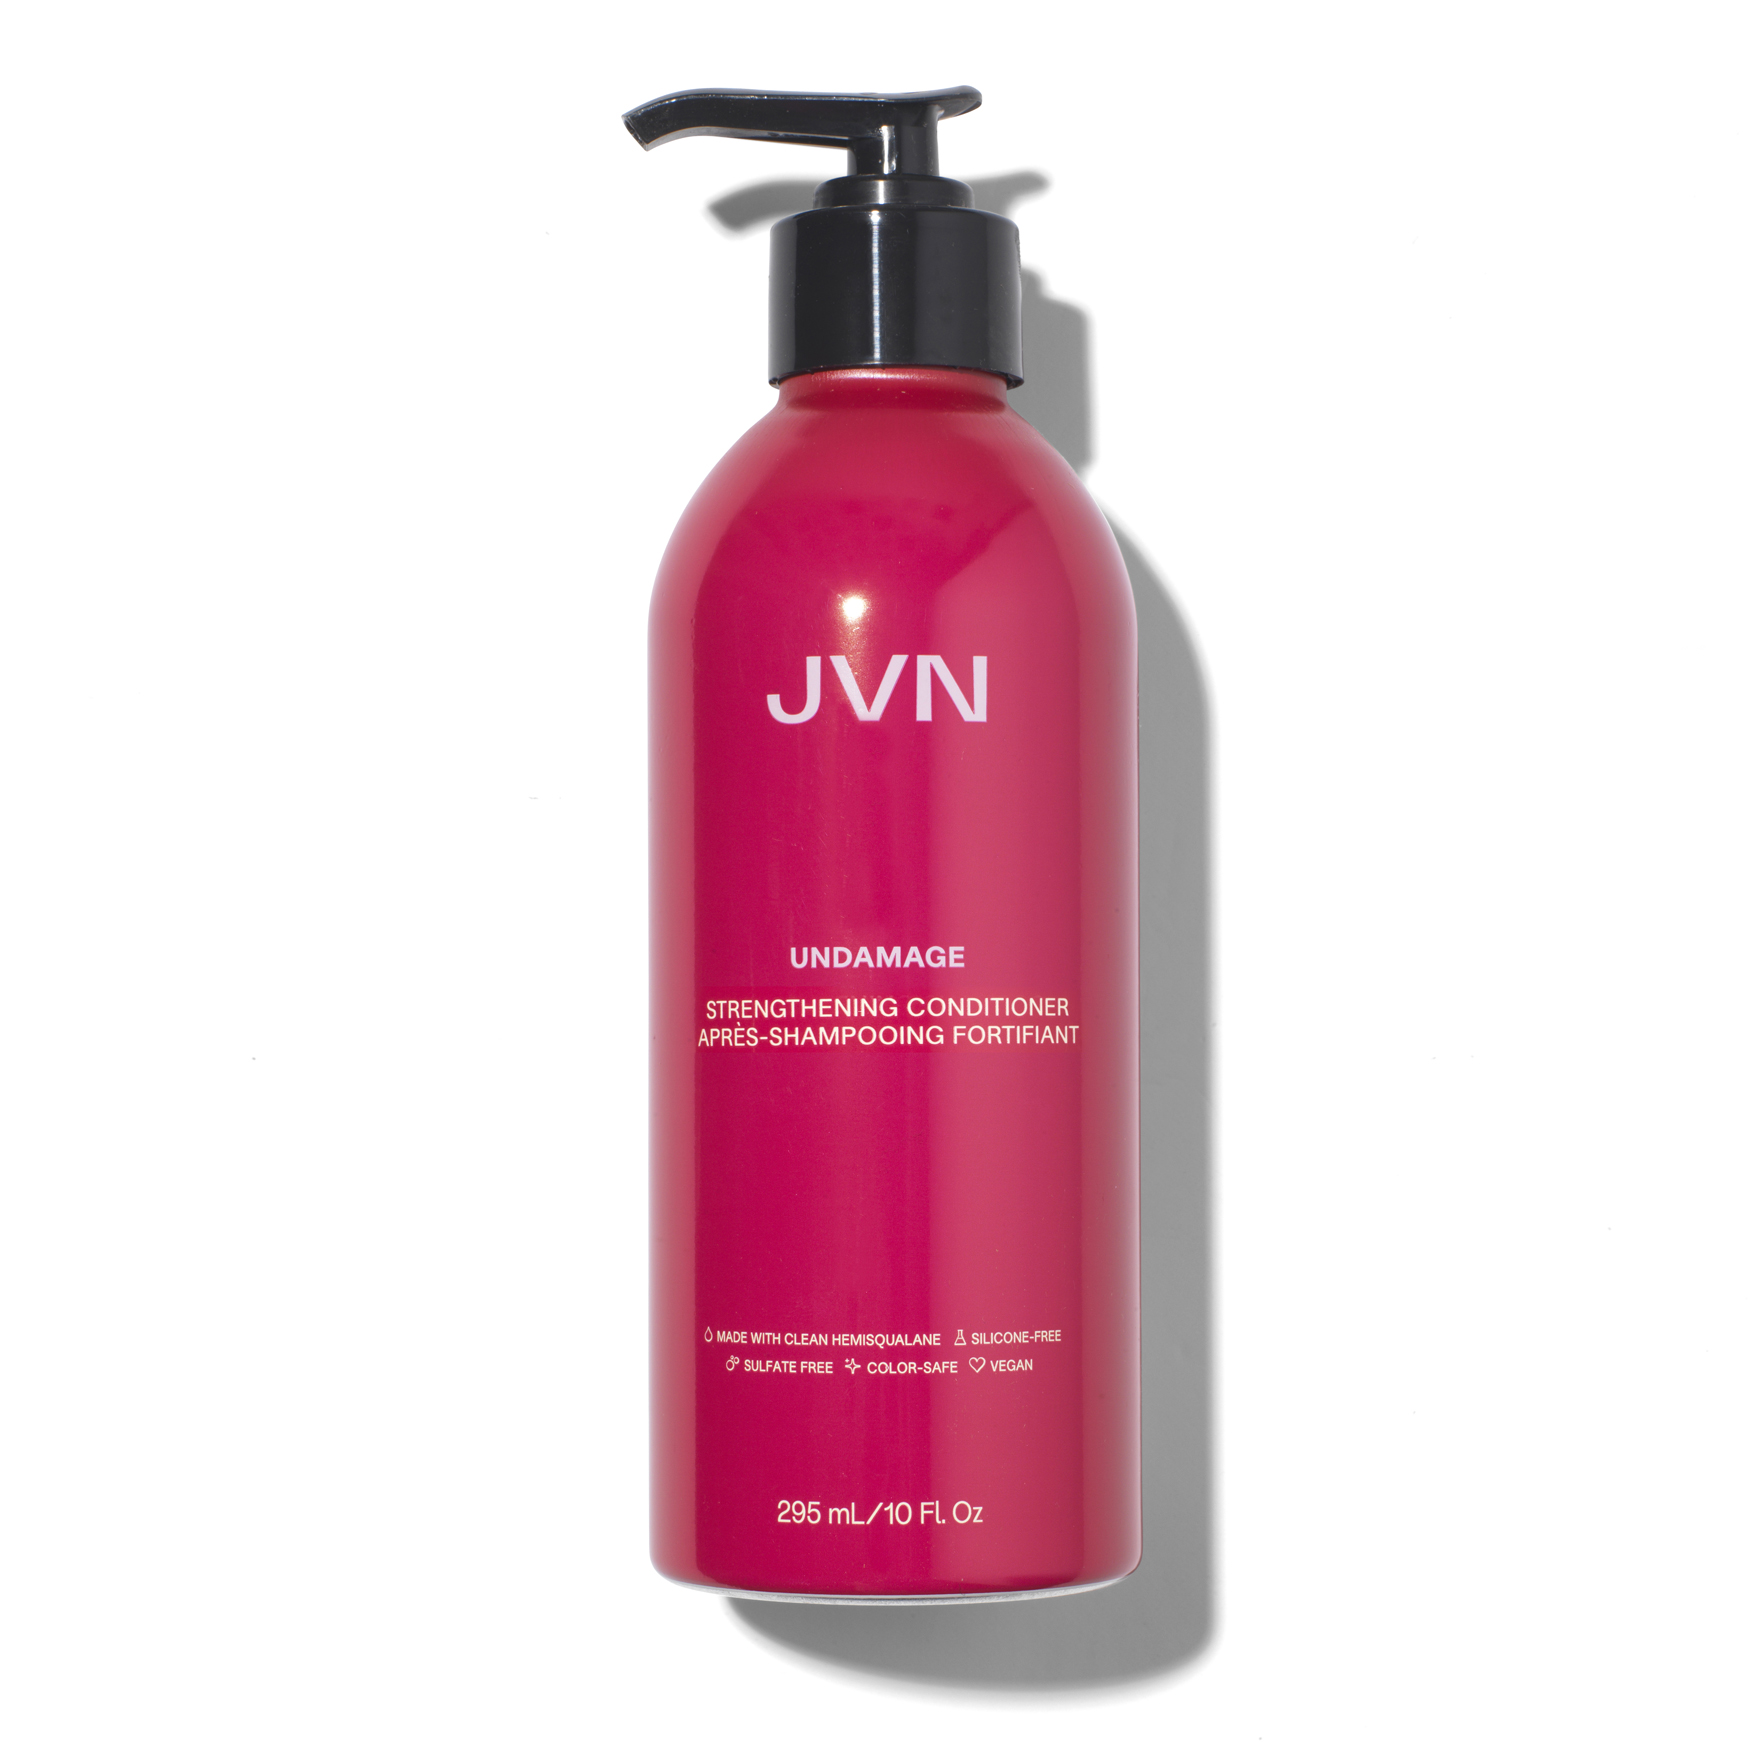 JVN Hair Undamage Strengthening Conditioner | Space NK